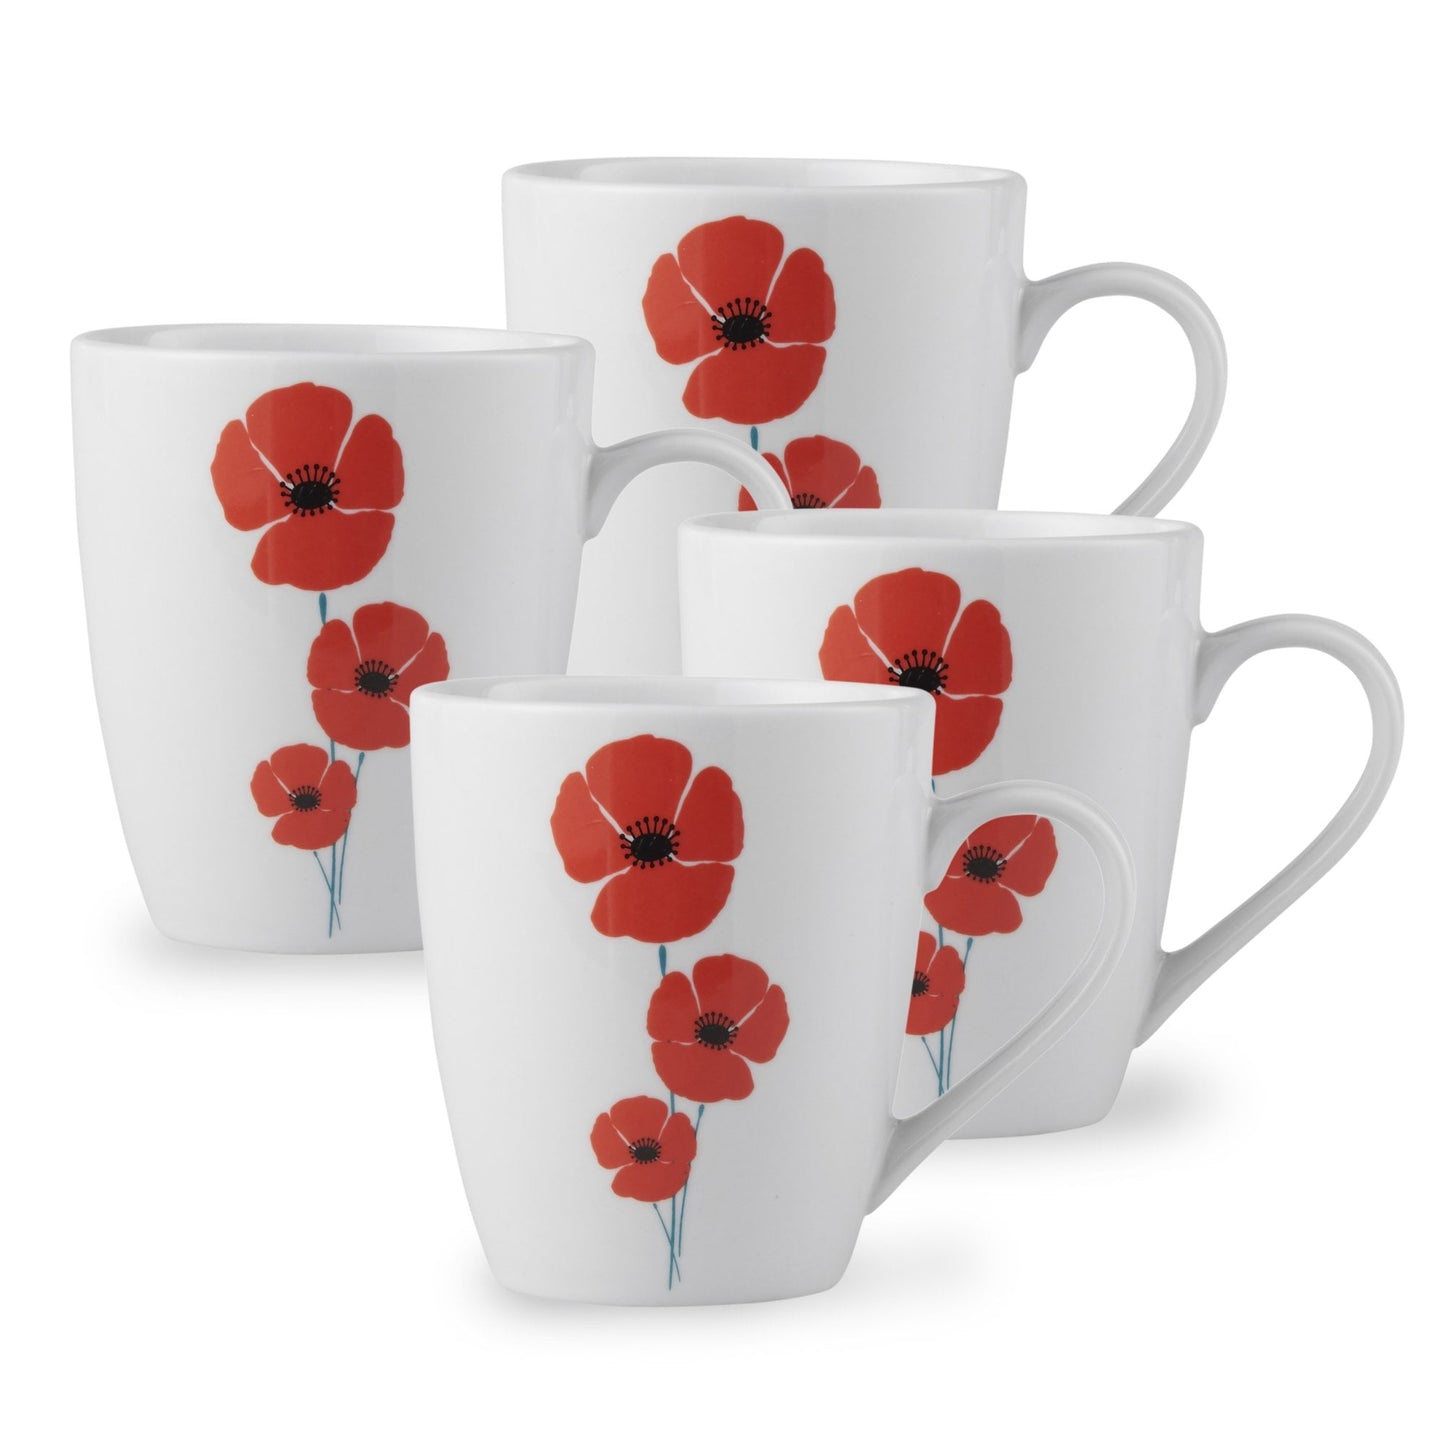 Lewis's Mug Pack Set of 4 - Poppy